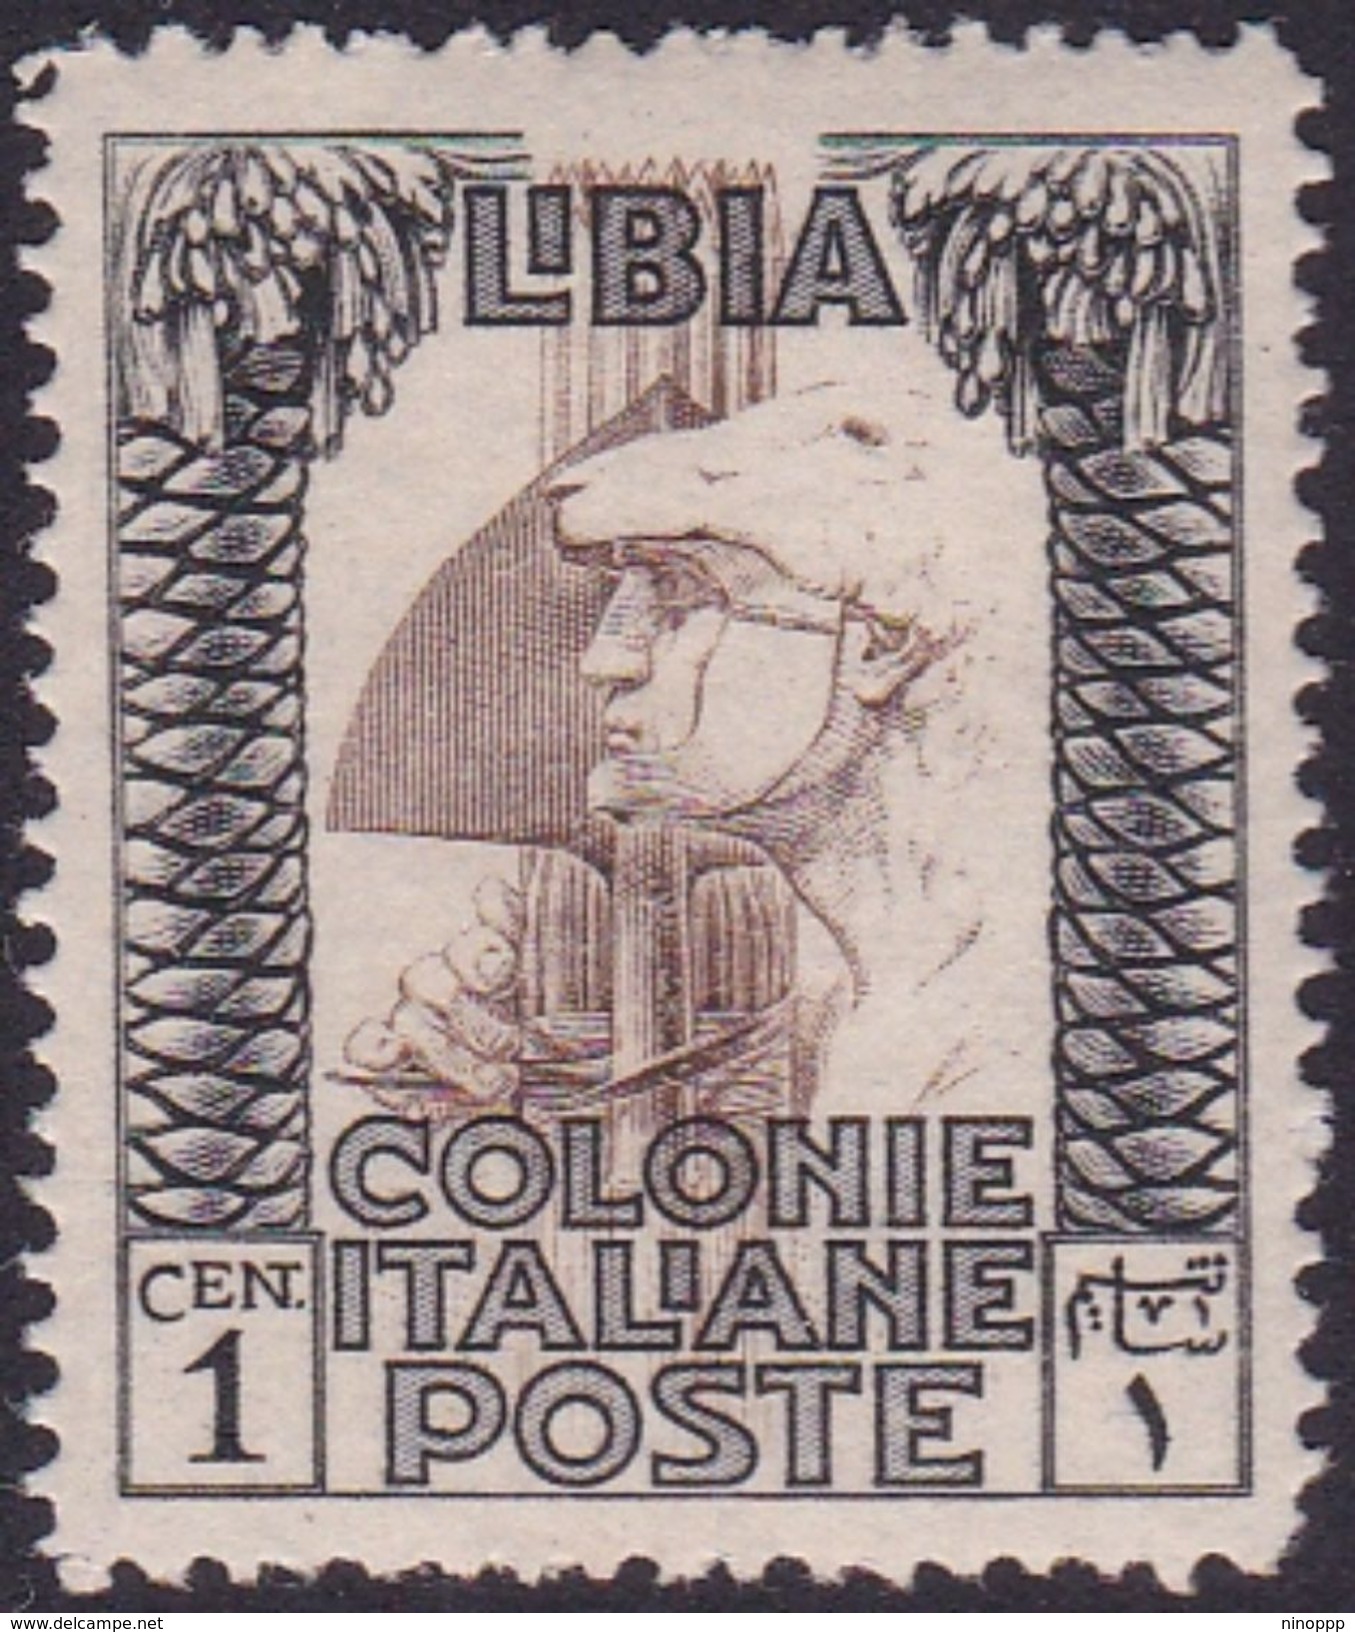 Italy-Colonies And Territories-Libya S 44 1924 ,Pictorials,1c Roman Legionary,Mint Never Hinged - Libya